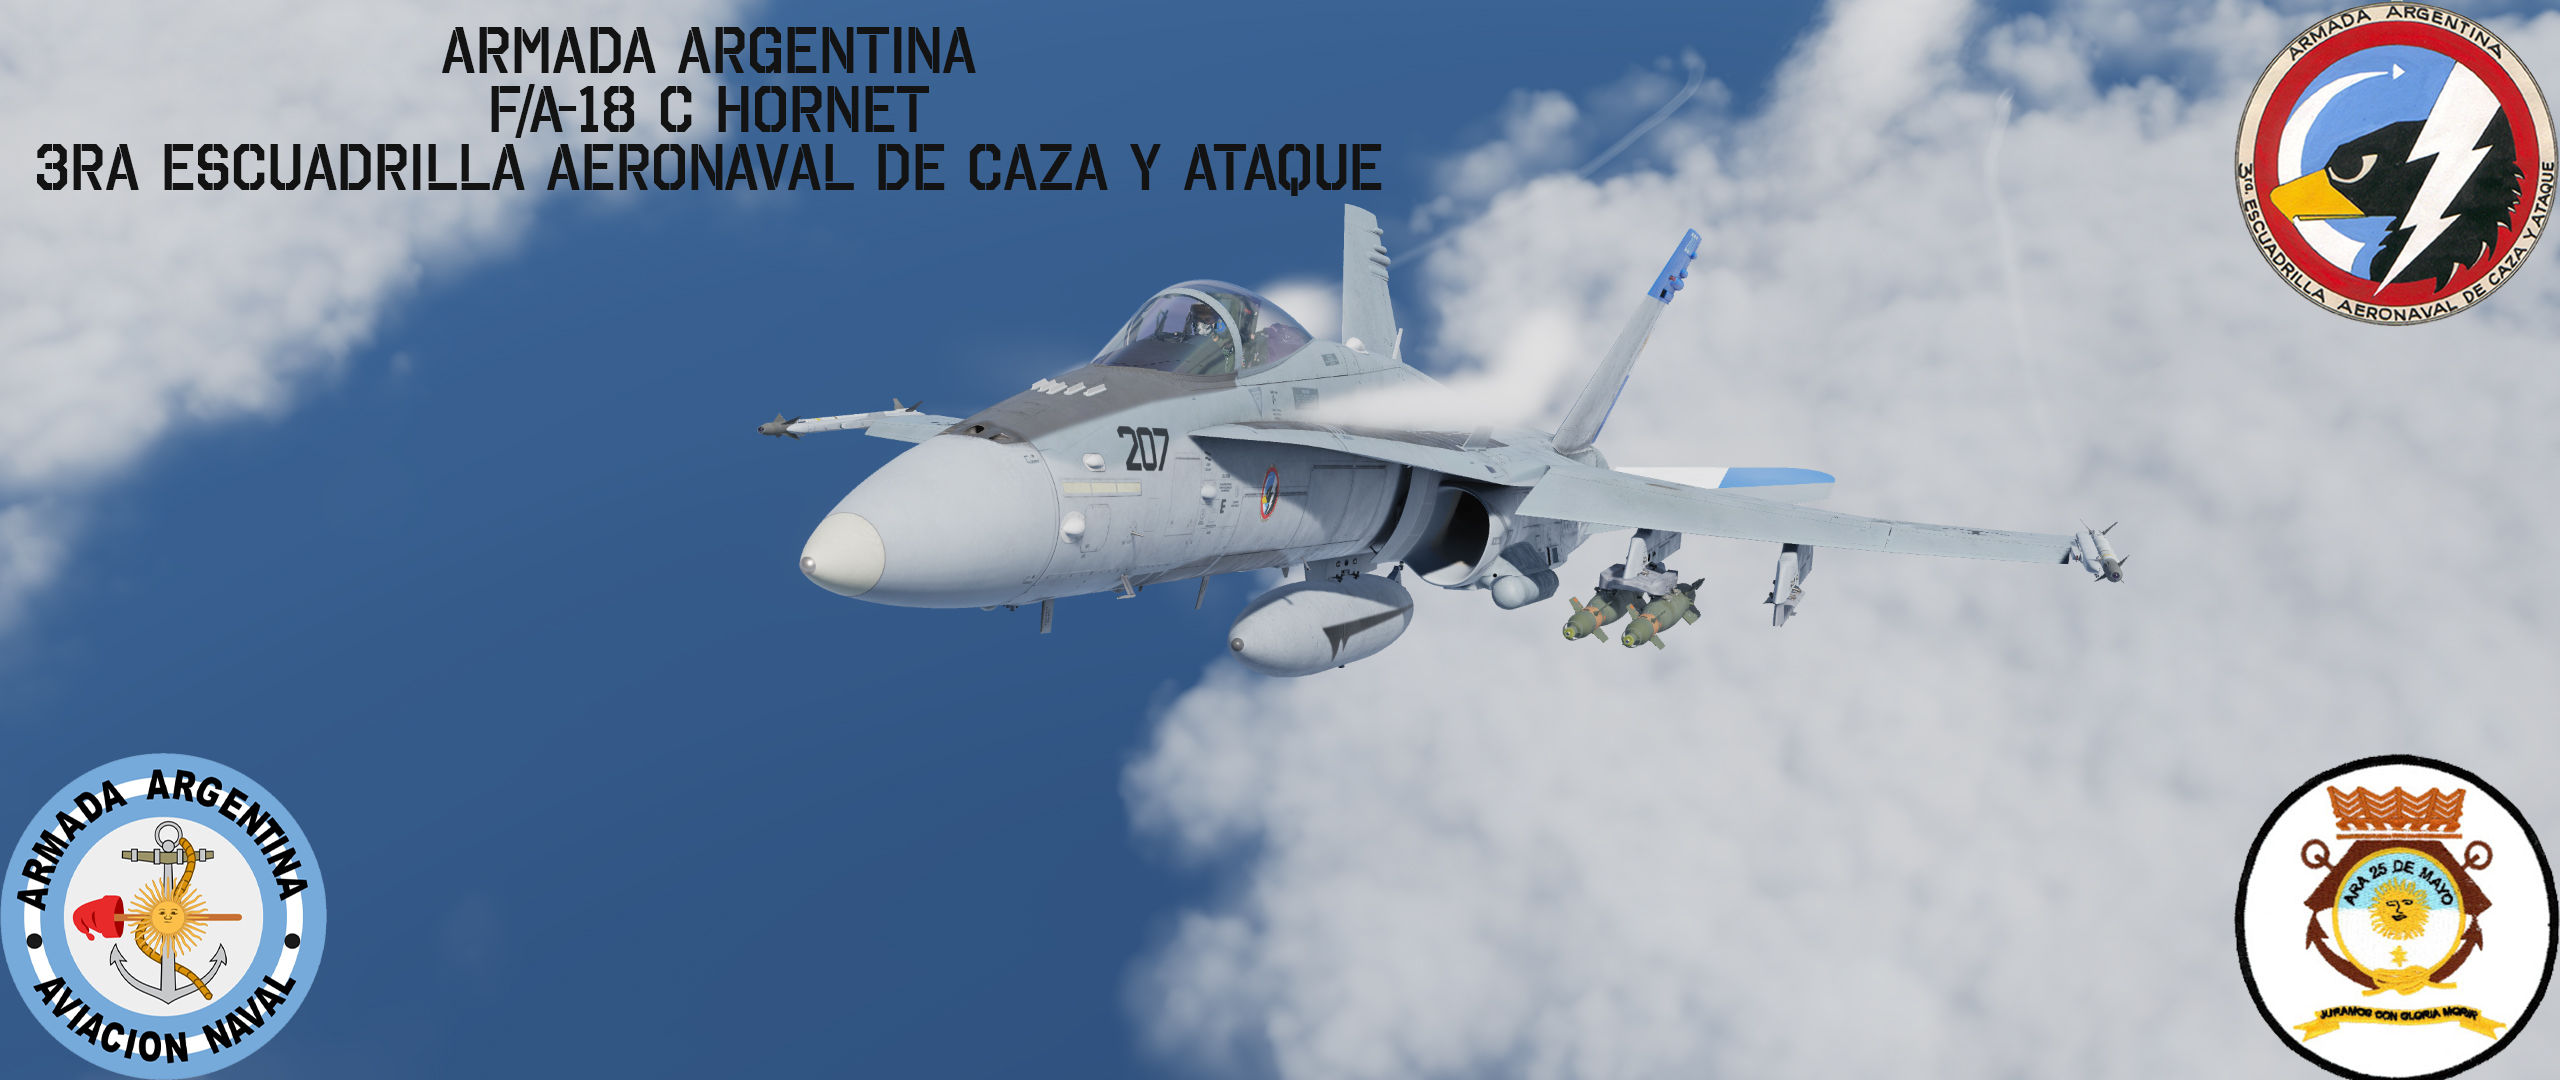 Ficcional Armada Argentina Hornet